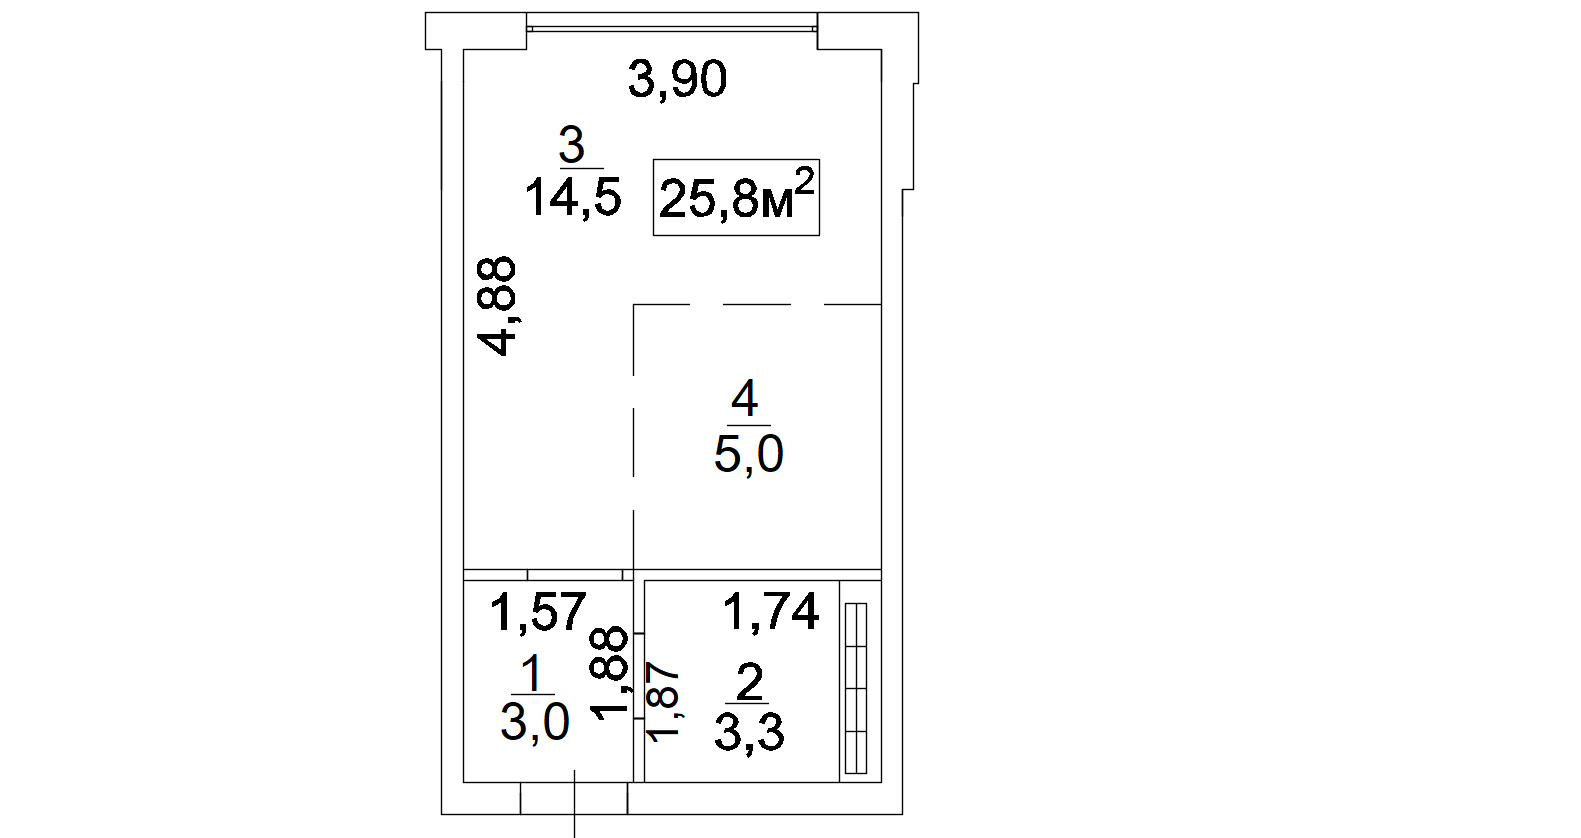 Planning Smart flats area 25.8m2, AB-02-09/00007.